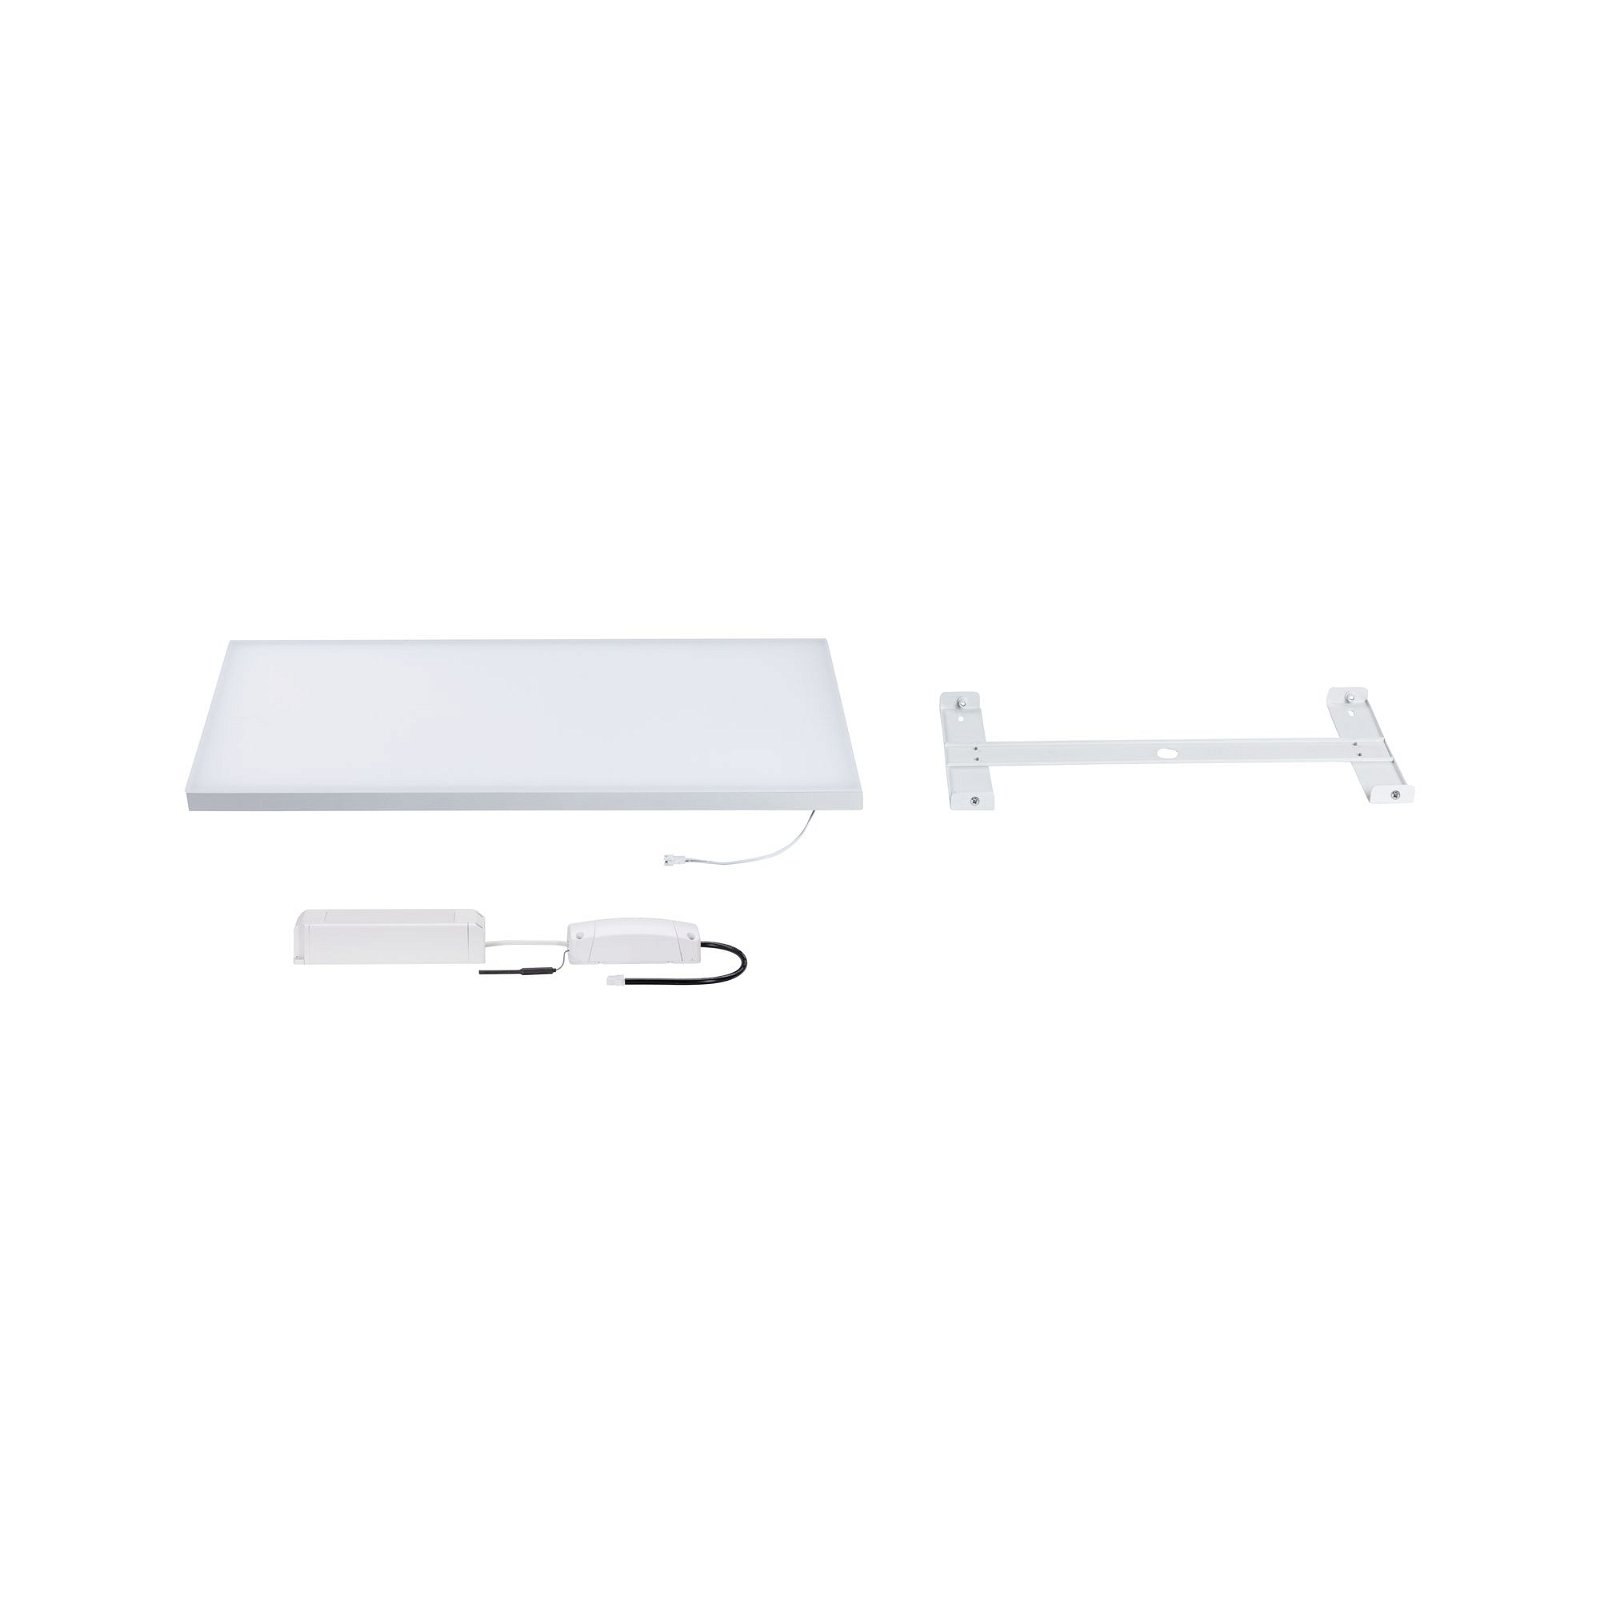 LED Panel Smart Home Zigbee Velora square 595x295mm Tunable White Matt white dimmable